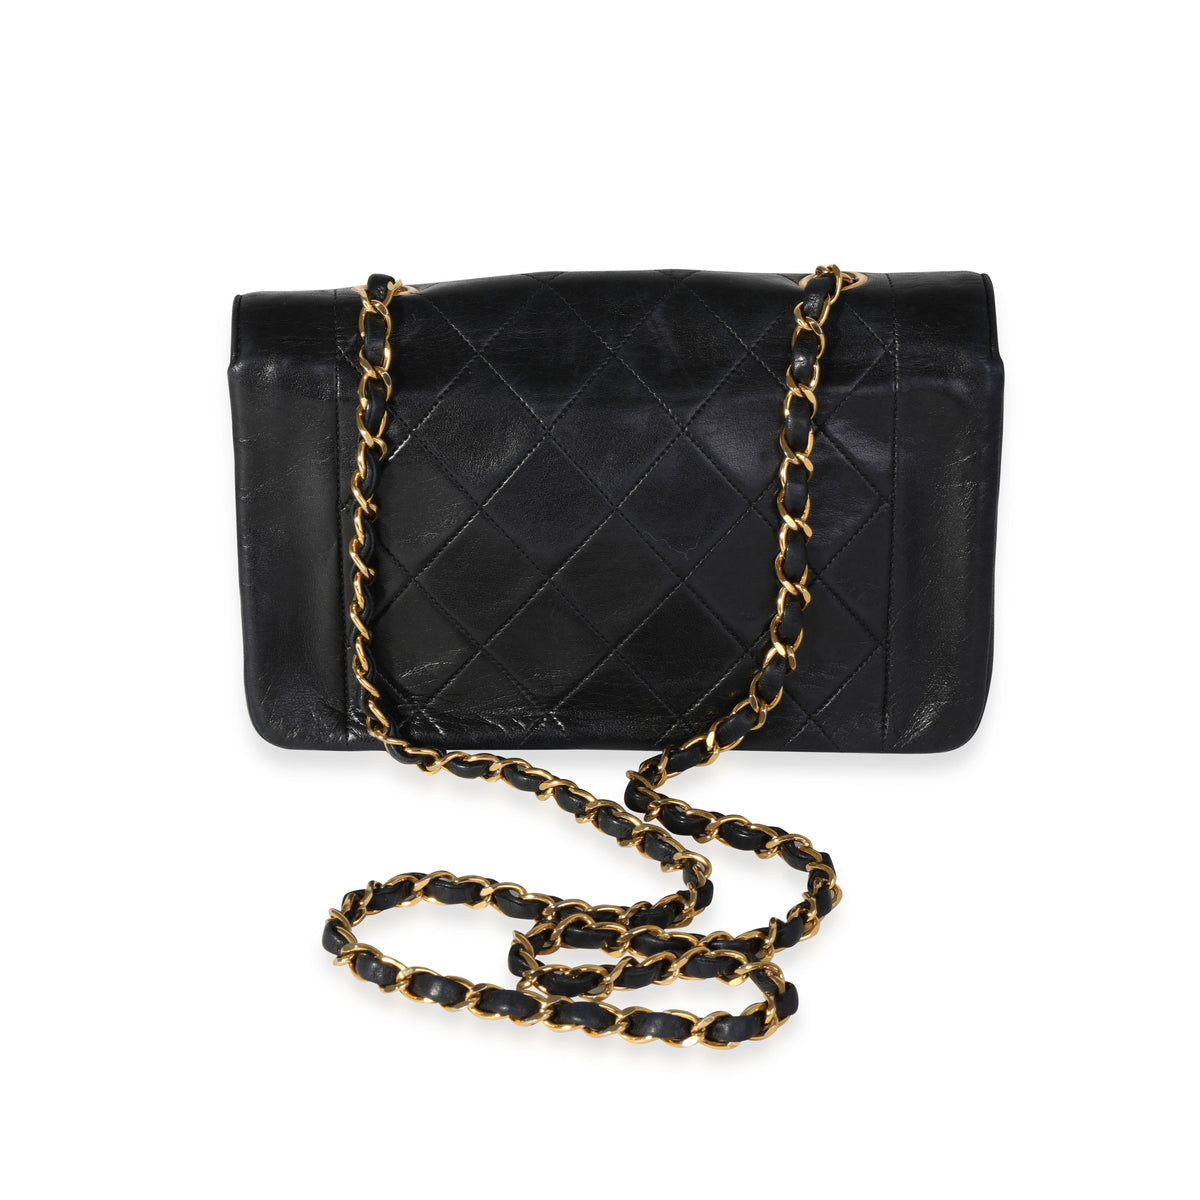 Chanel Vintage Black Quilted Lambskin Diana Bag